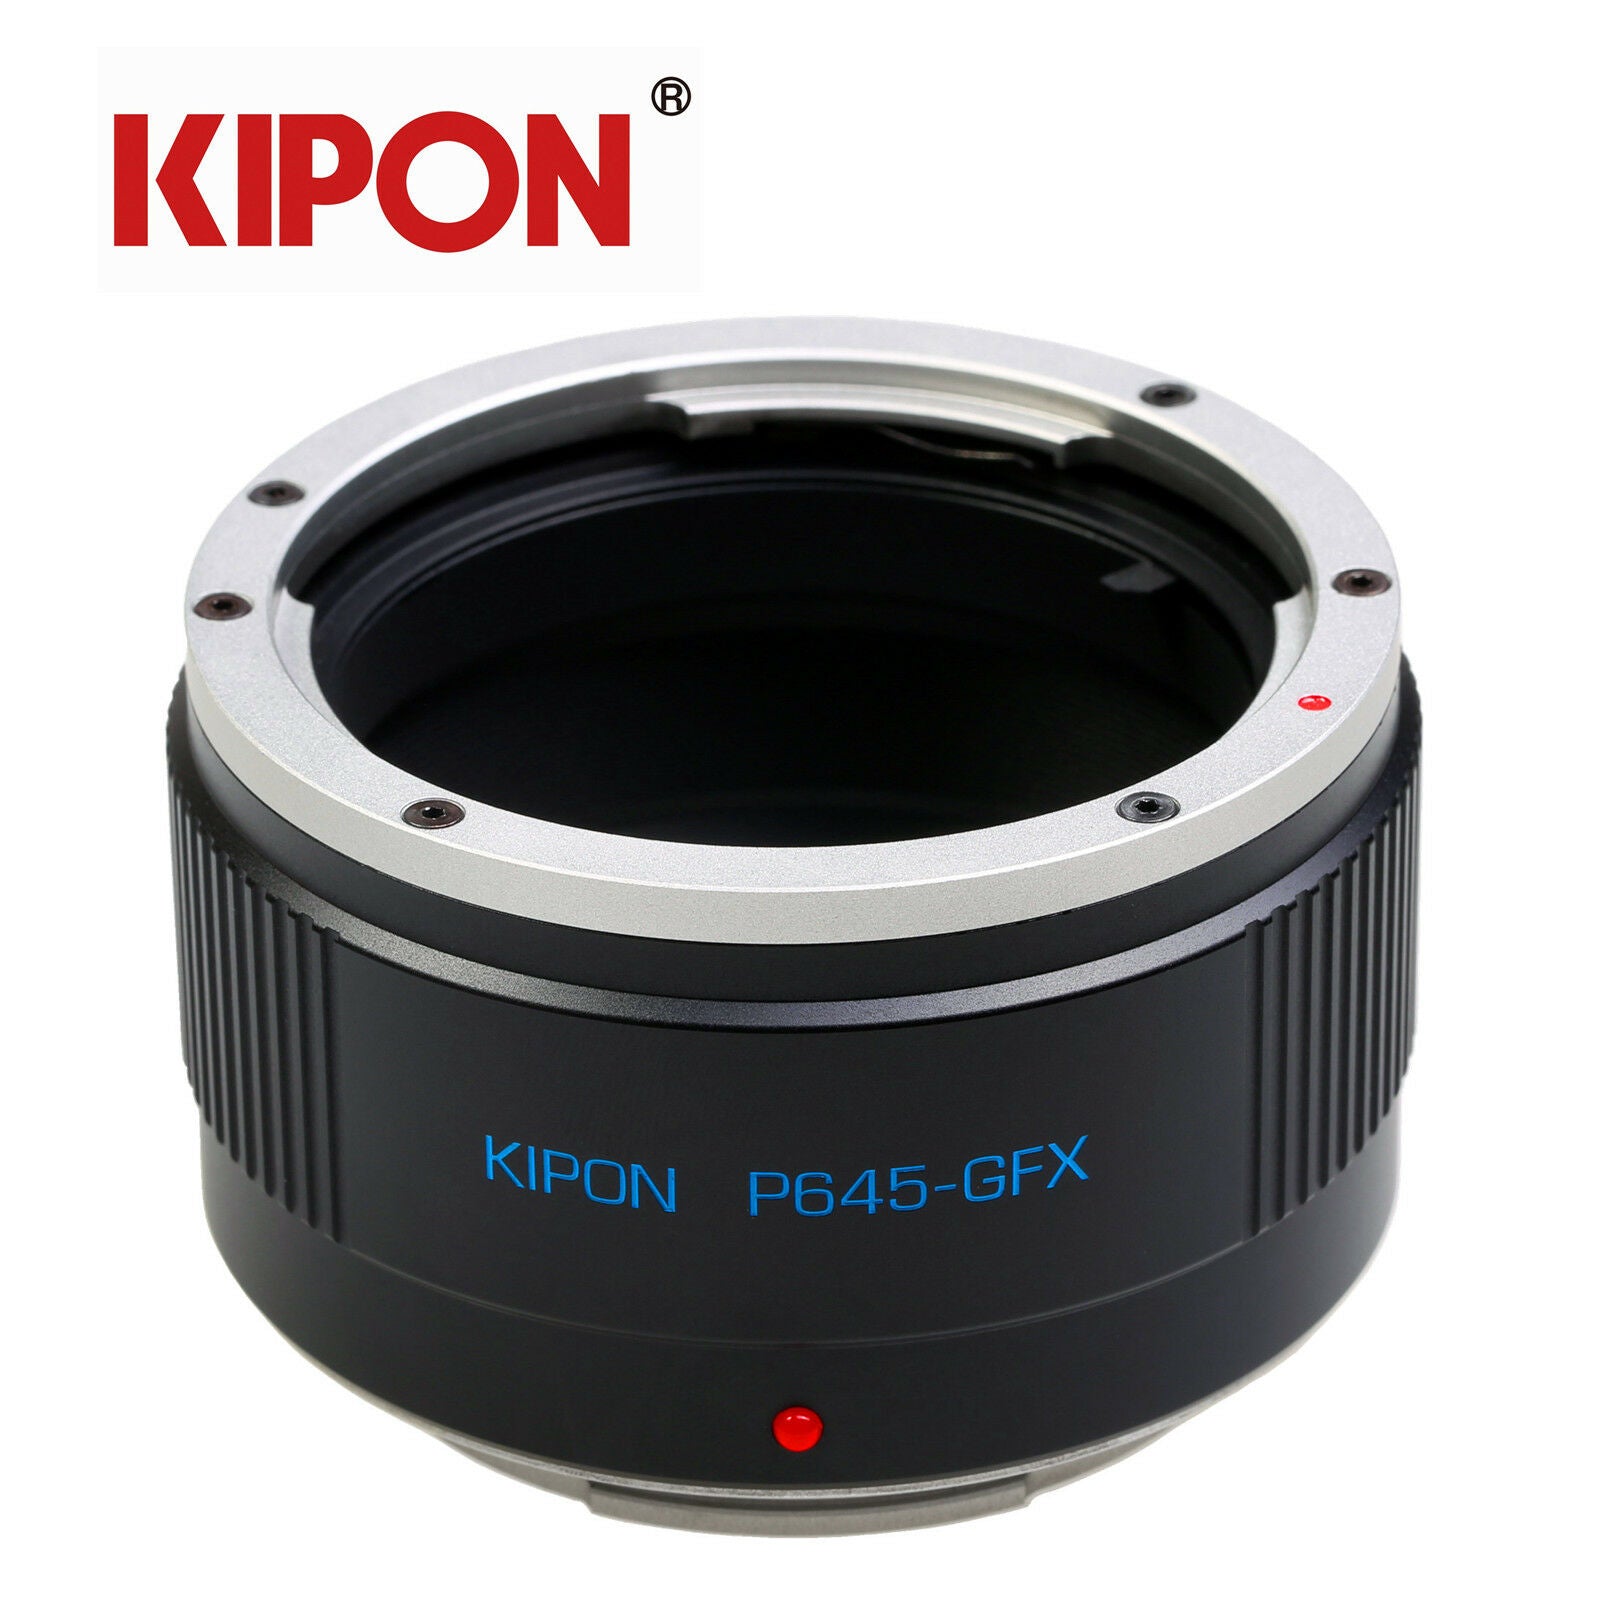 Kipon P645-GFX lens adapter for Pentax 645 mount P645 lens to